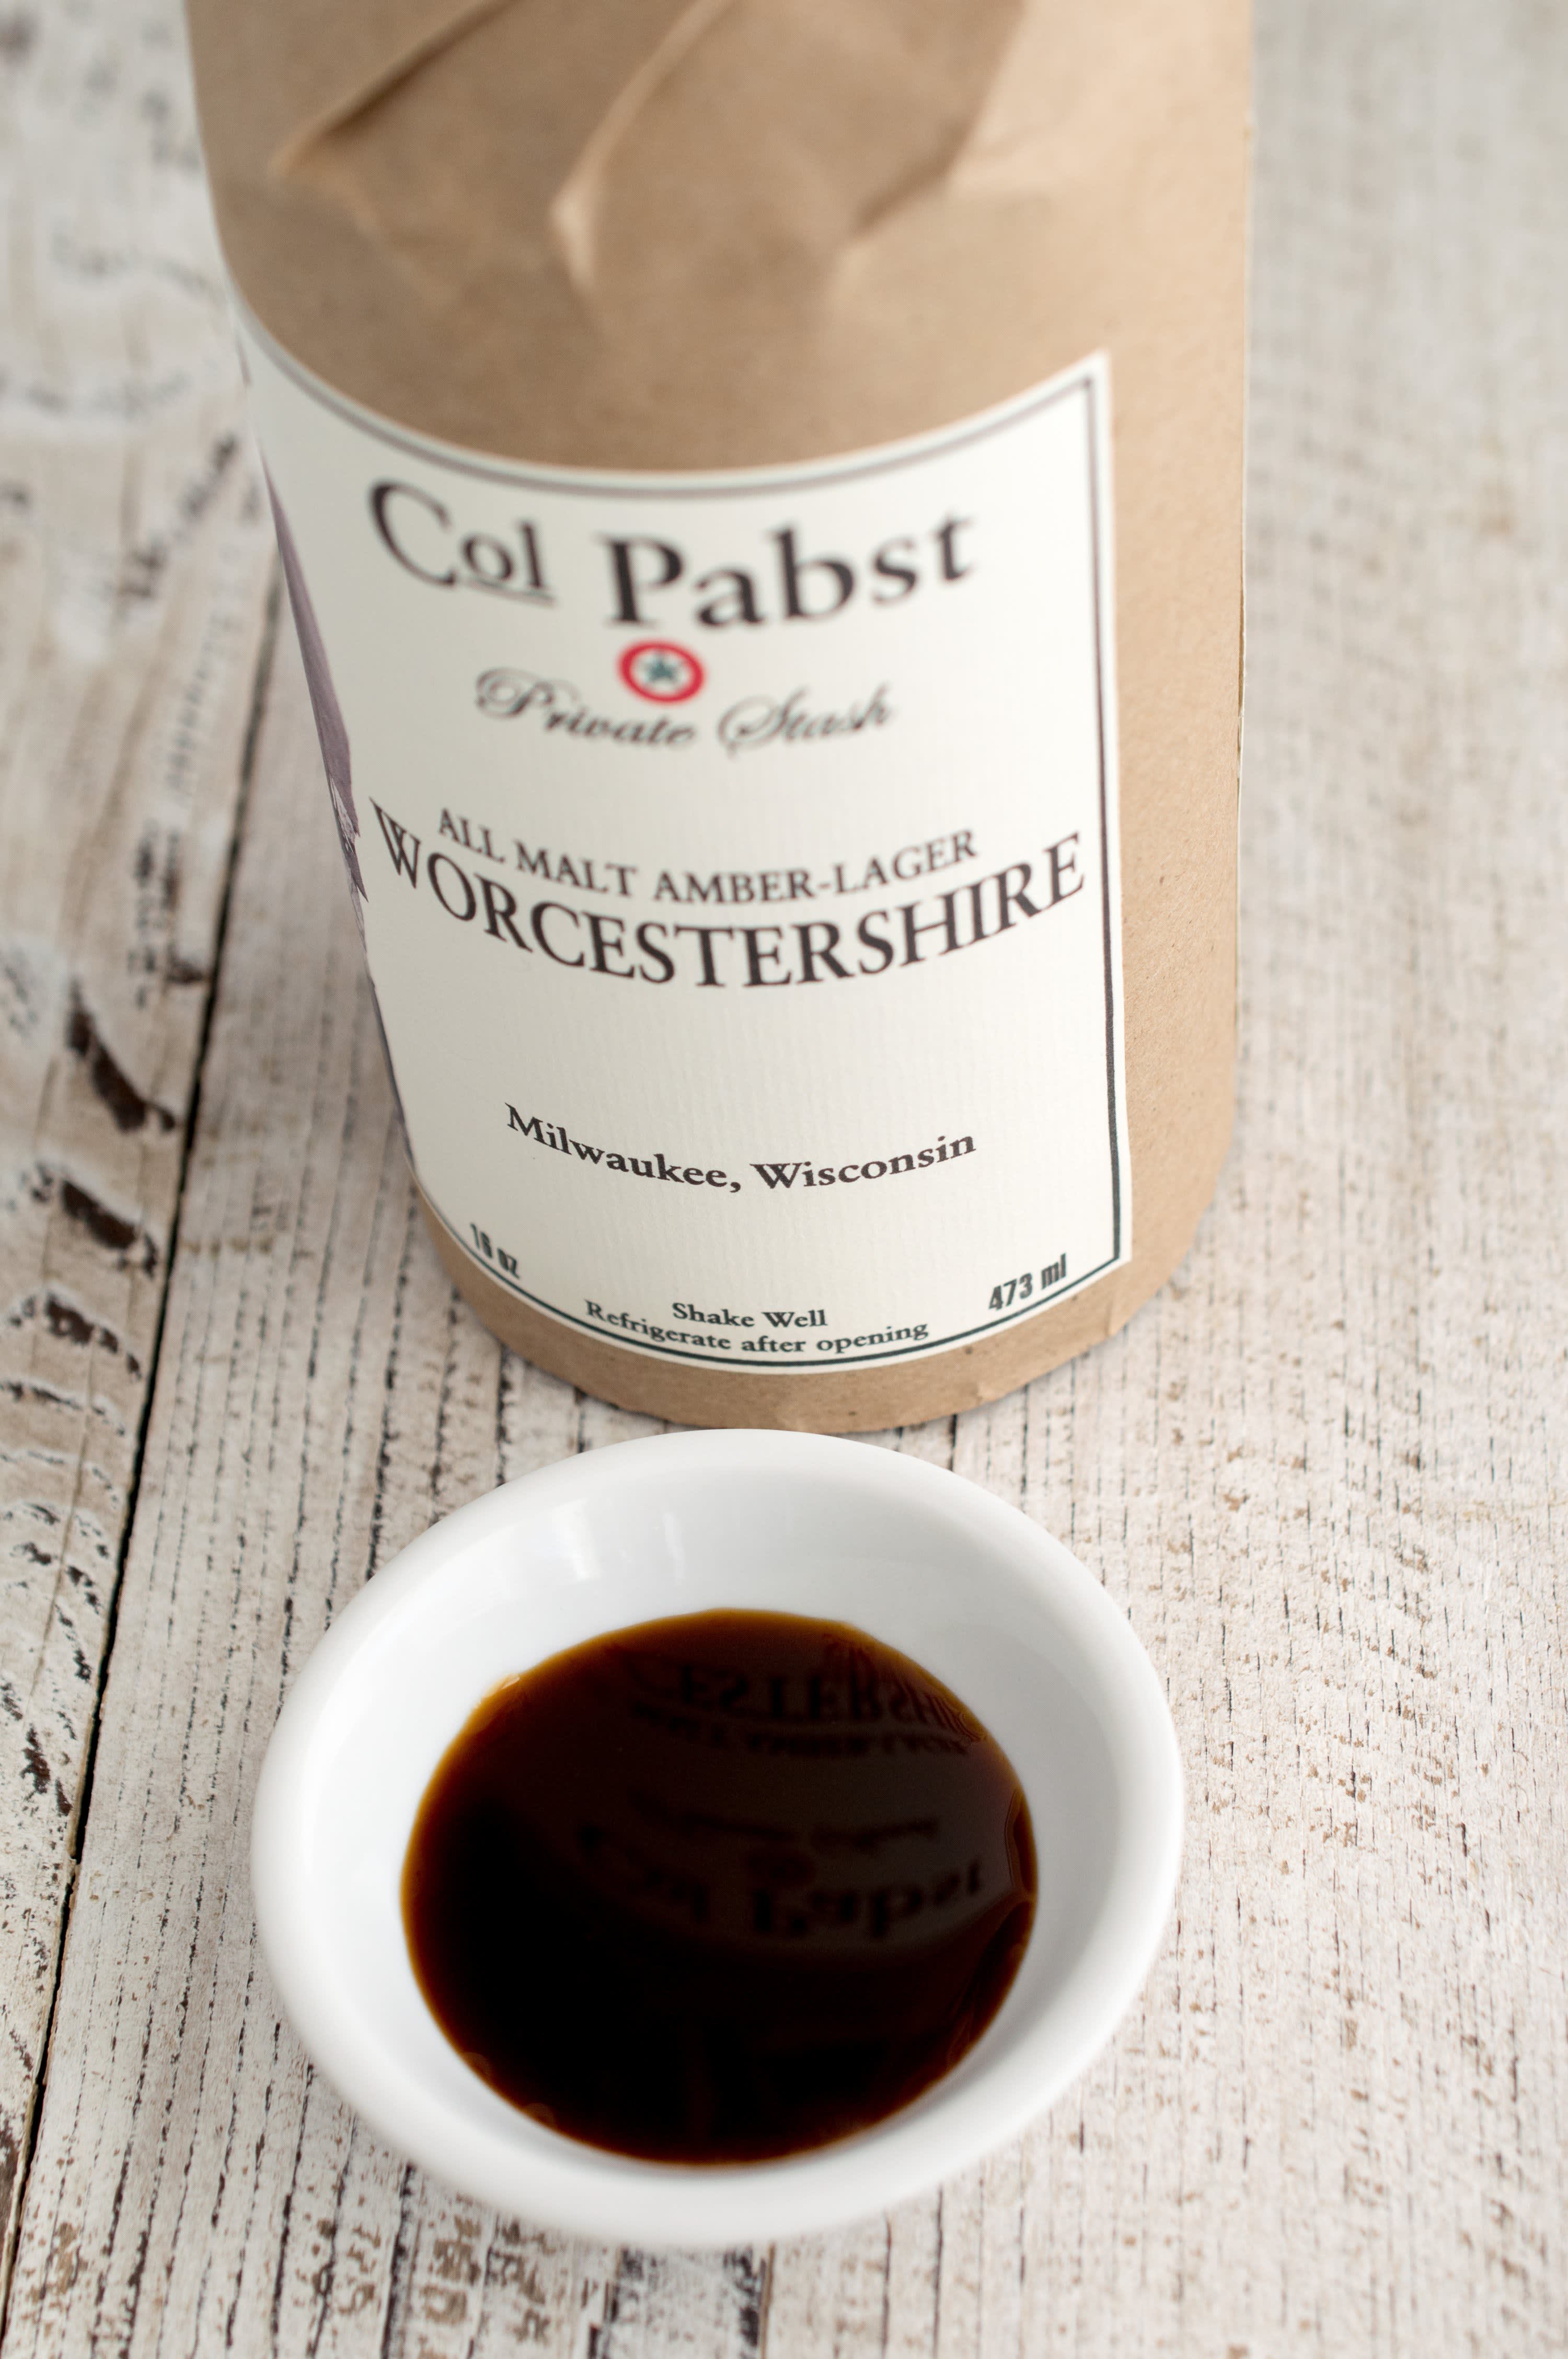 Col Pabst Worcestershire Sauce – AllSpice Culinarium